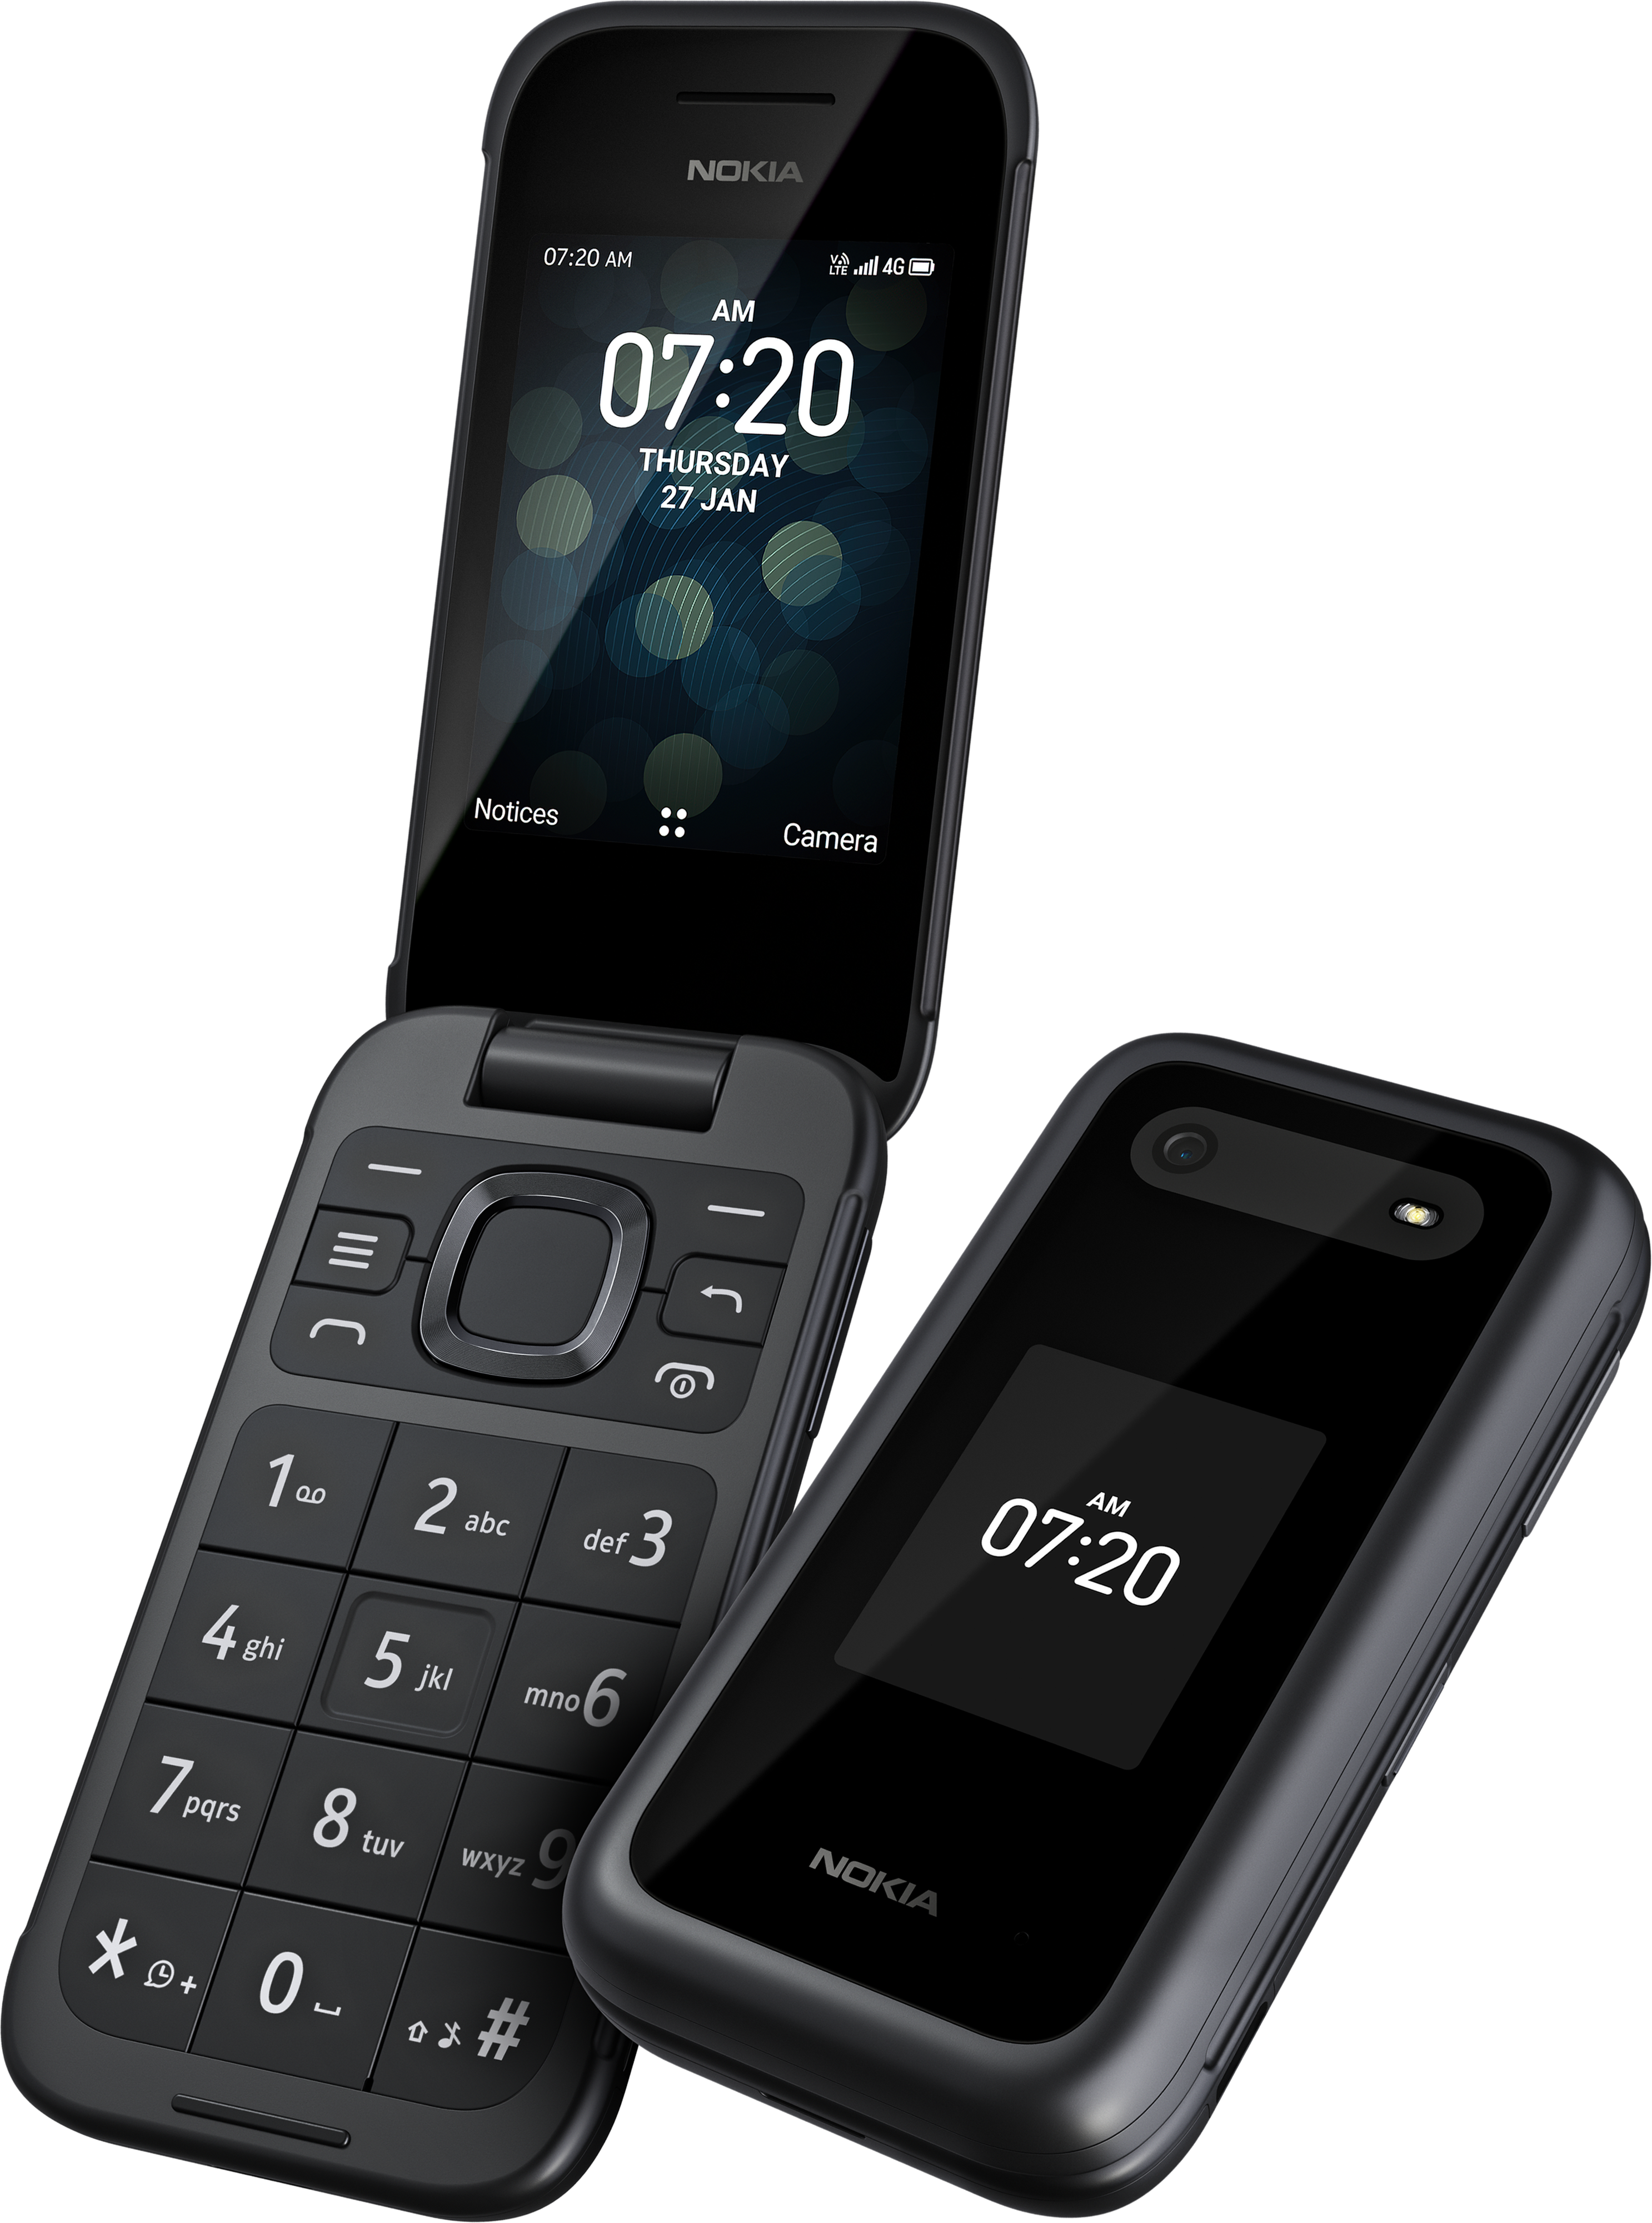 Раскладушка flip. Nokia 2760 Flip 4g. Nokia раскладушка 2760. Нокиа 2660 Flip. Nokia 2660 Flip 4g.